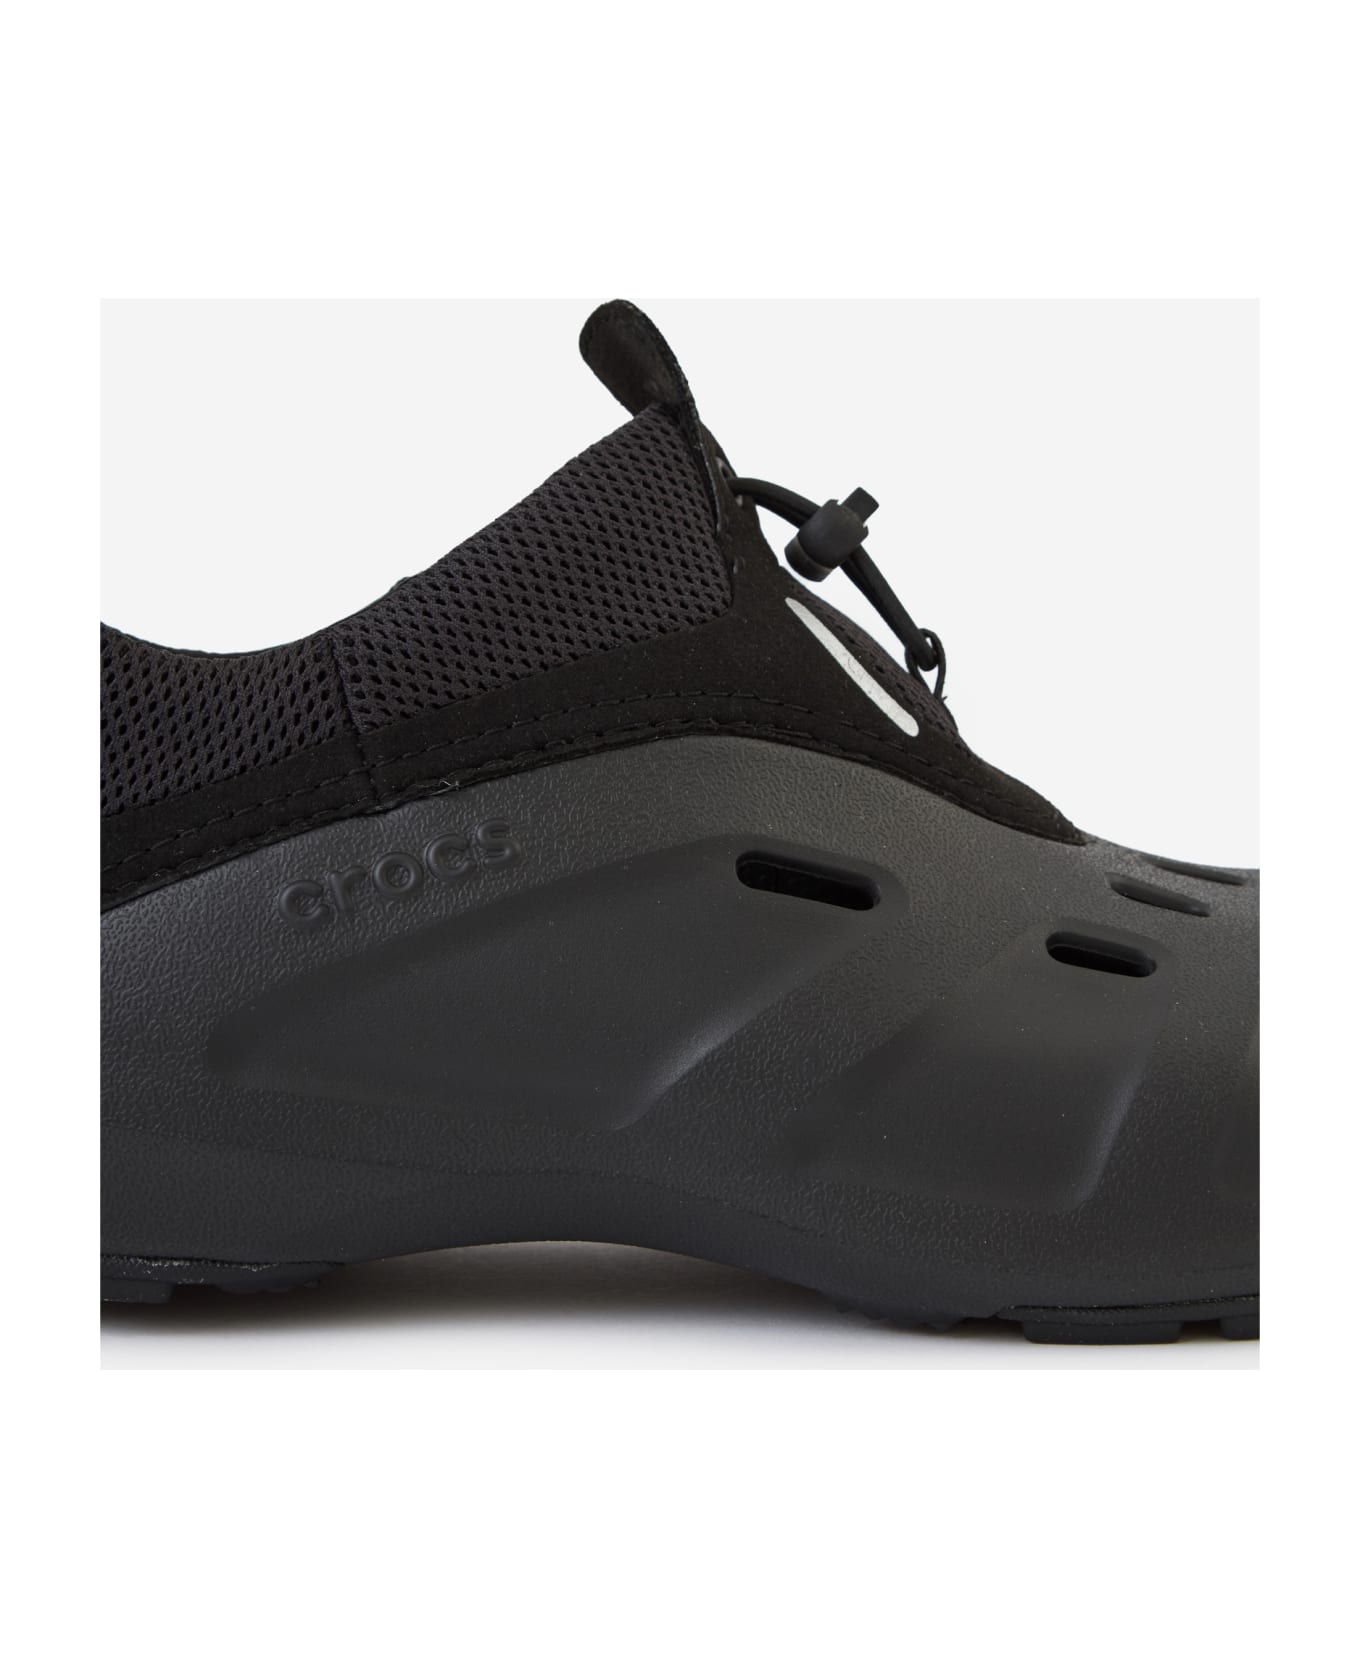 Crocs Quick Trail Low Shoes - black スニーカー